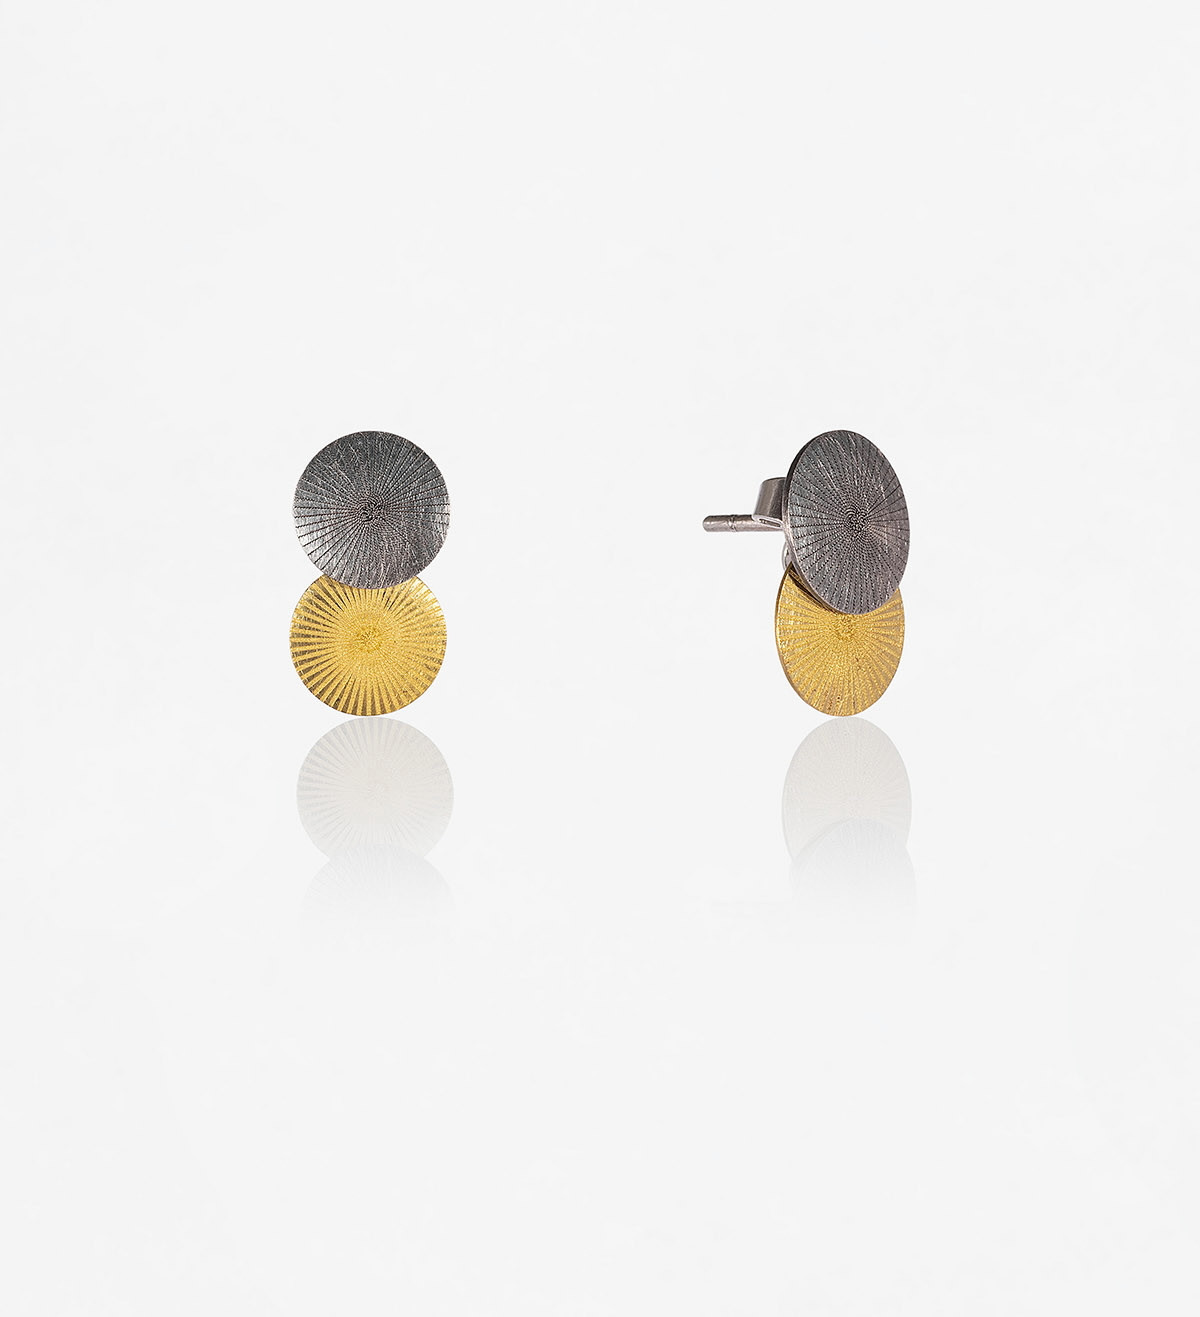 18k gold and silver earrings Samurai 17mm